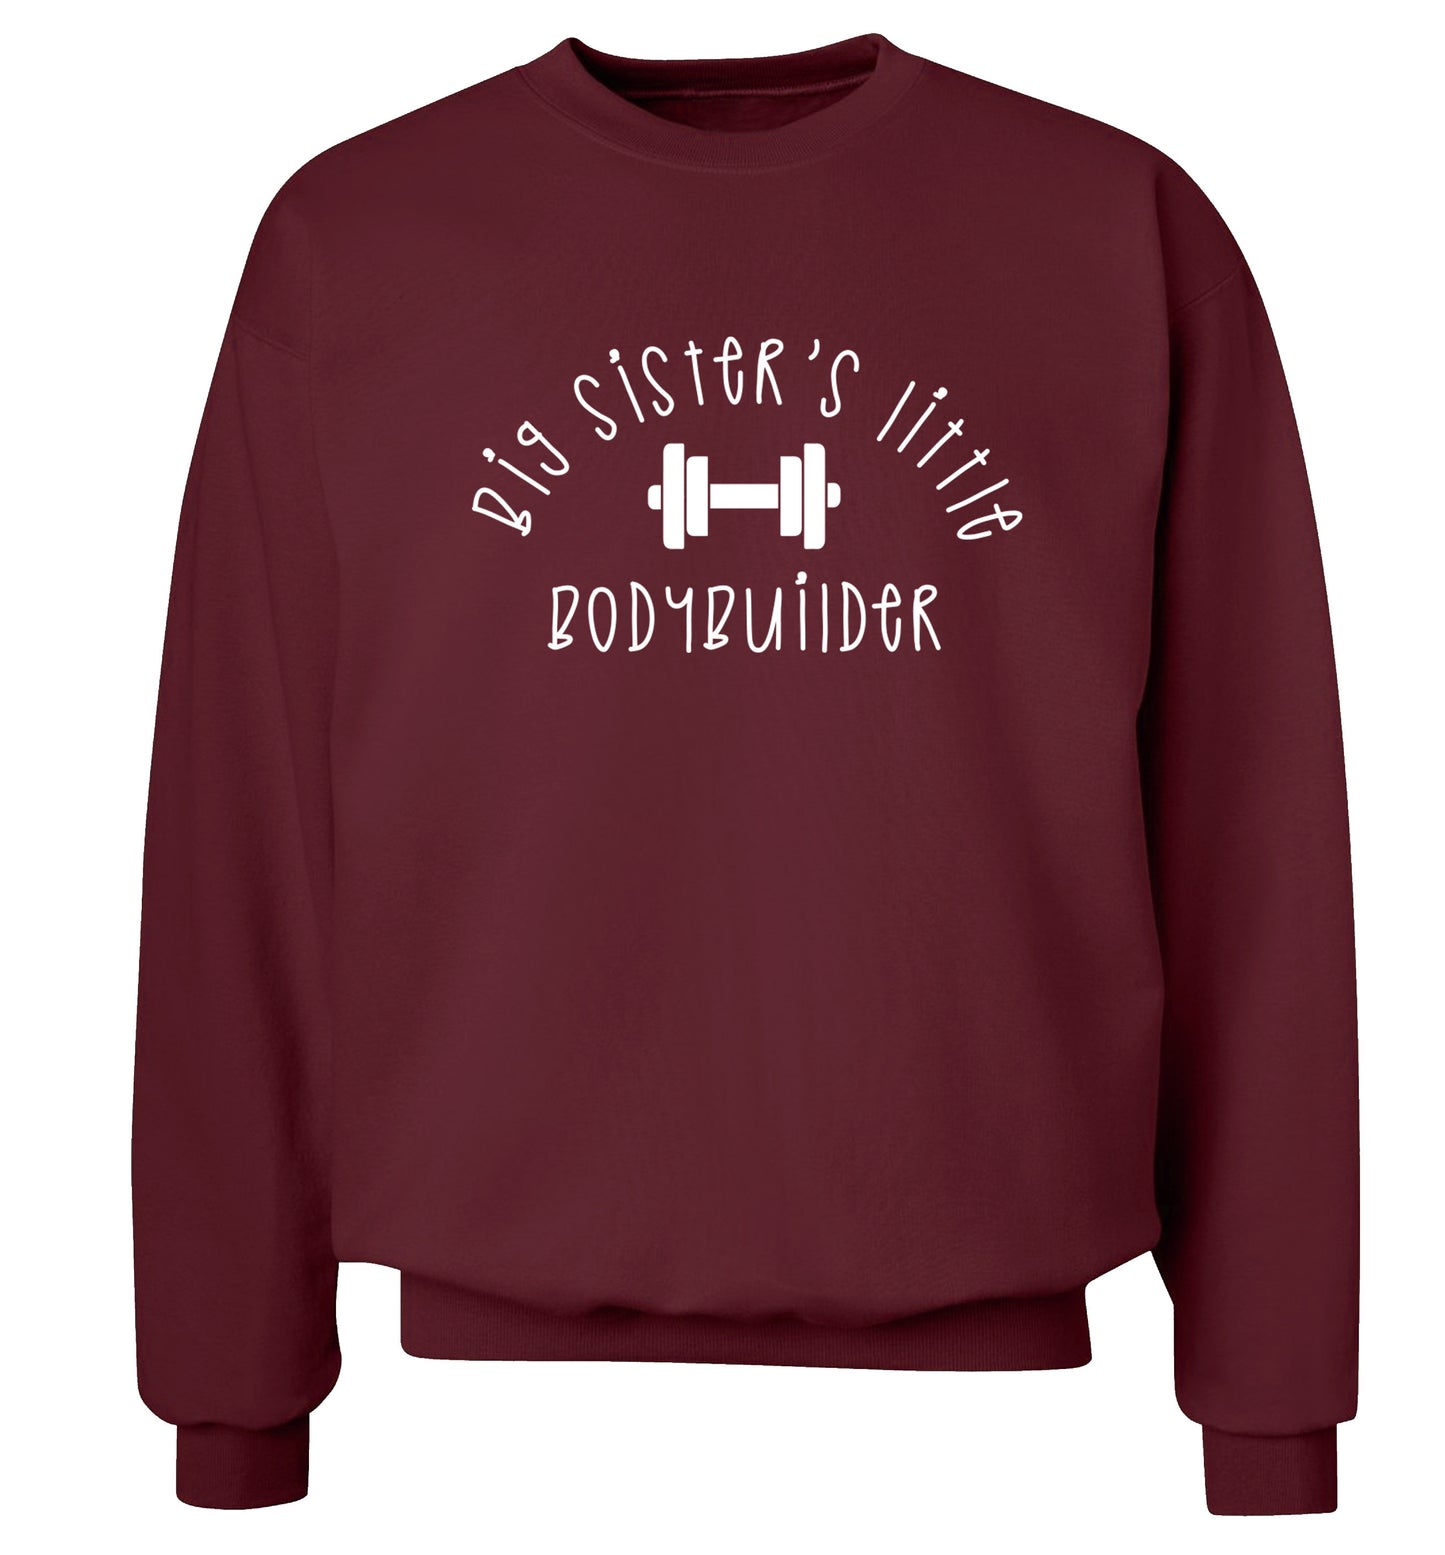 Big sister's little bodybuilder Adult's unisex maroon Sweater 2XL